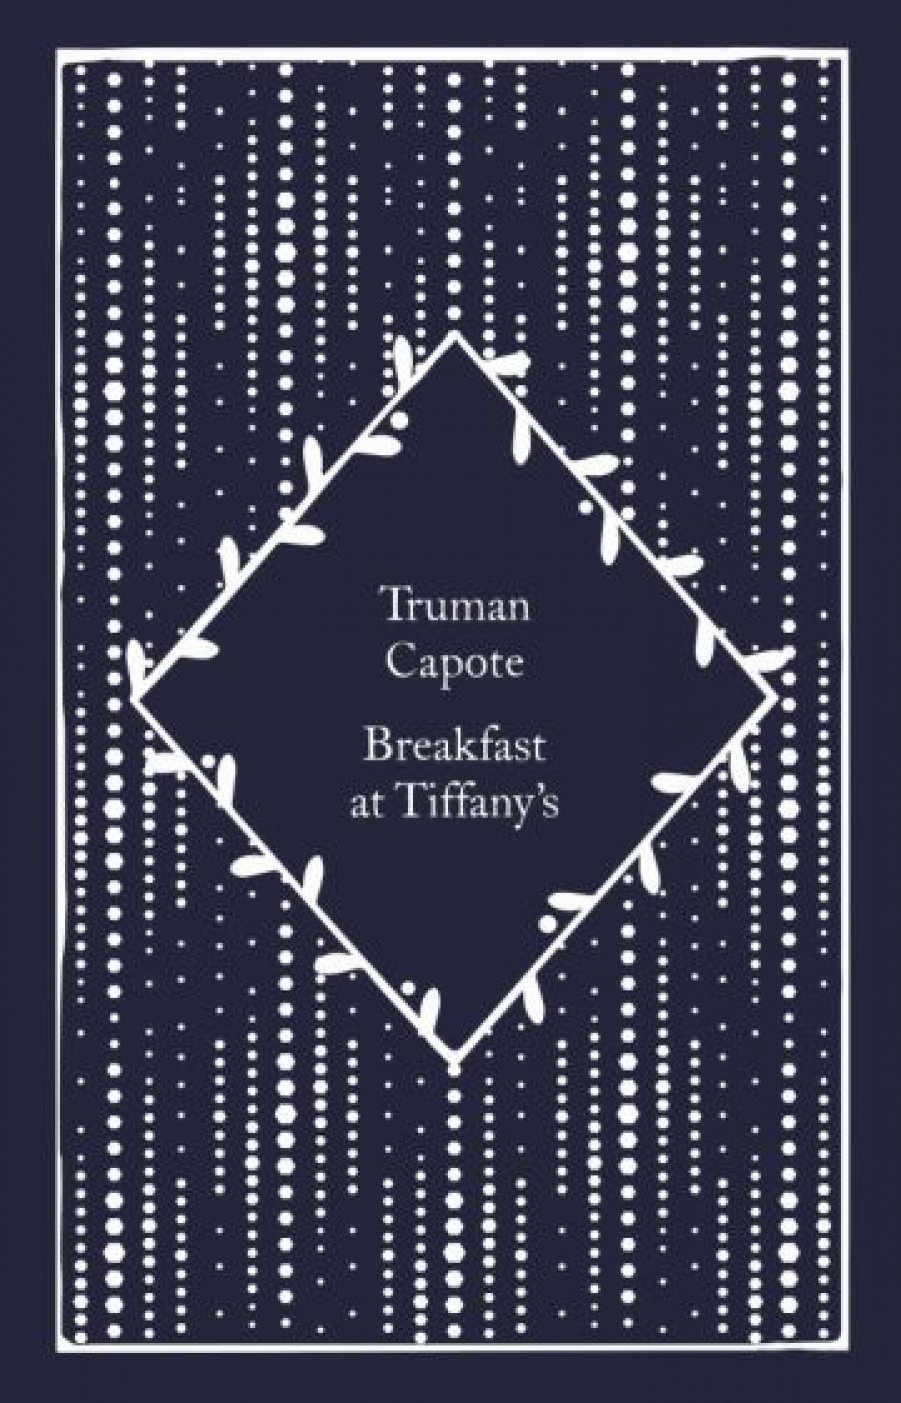 Truman Capote Breakfast at Tiffany's 